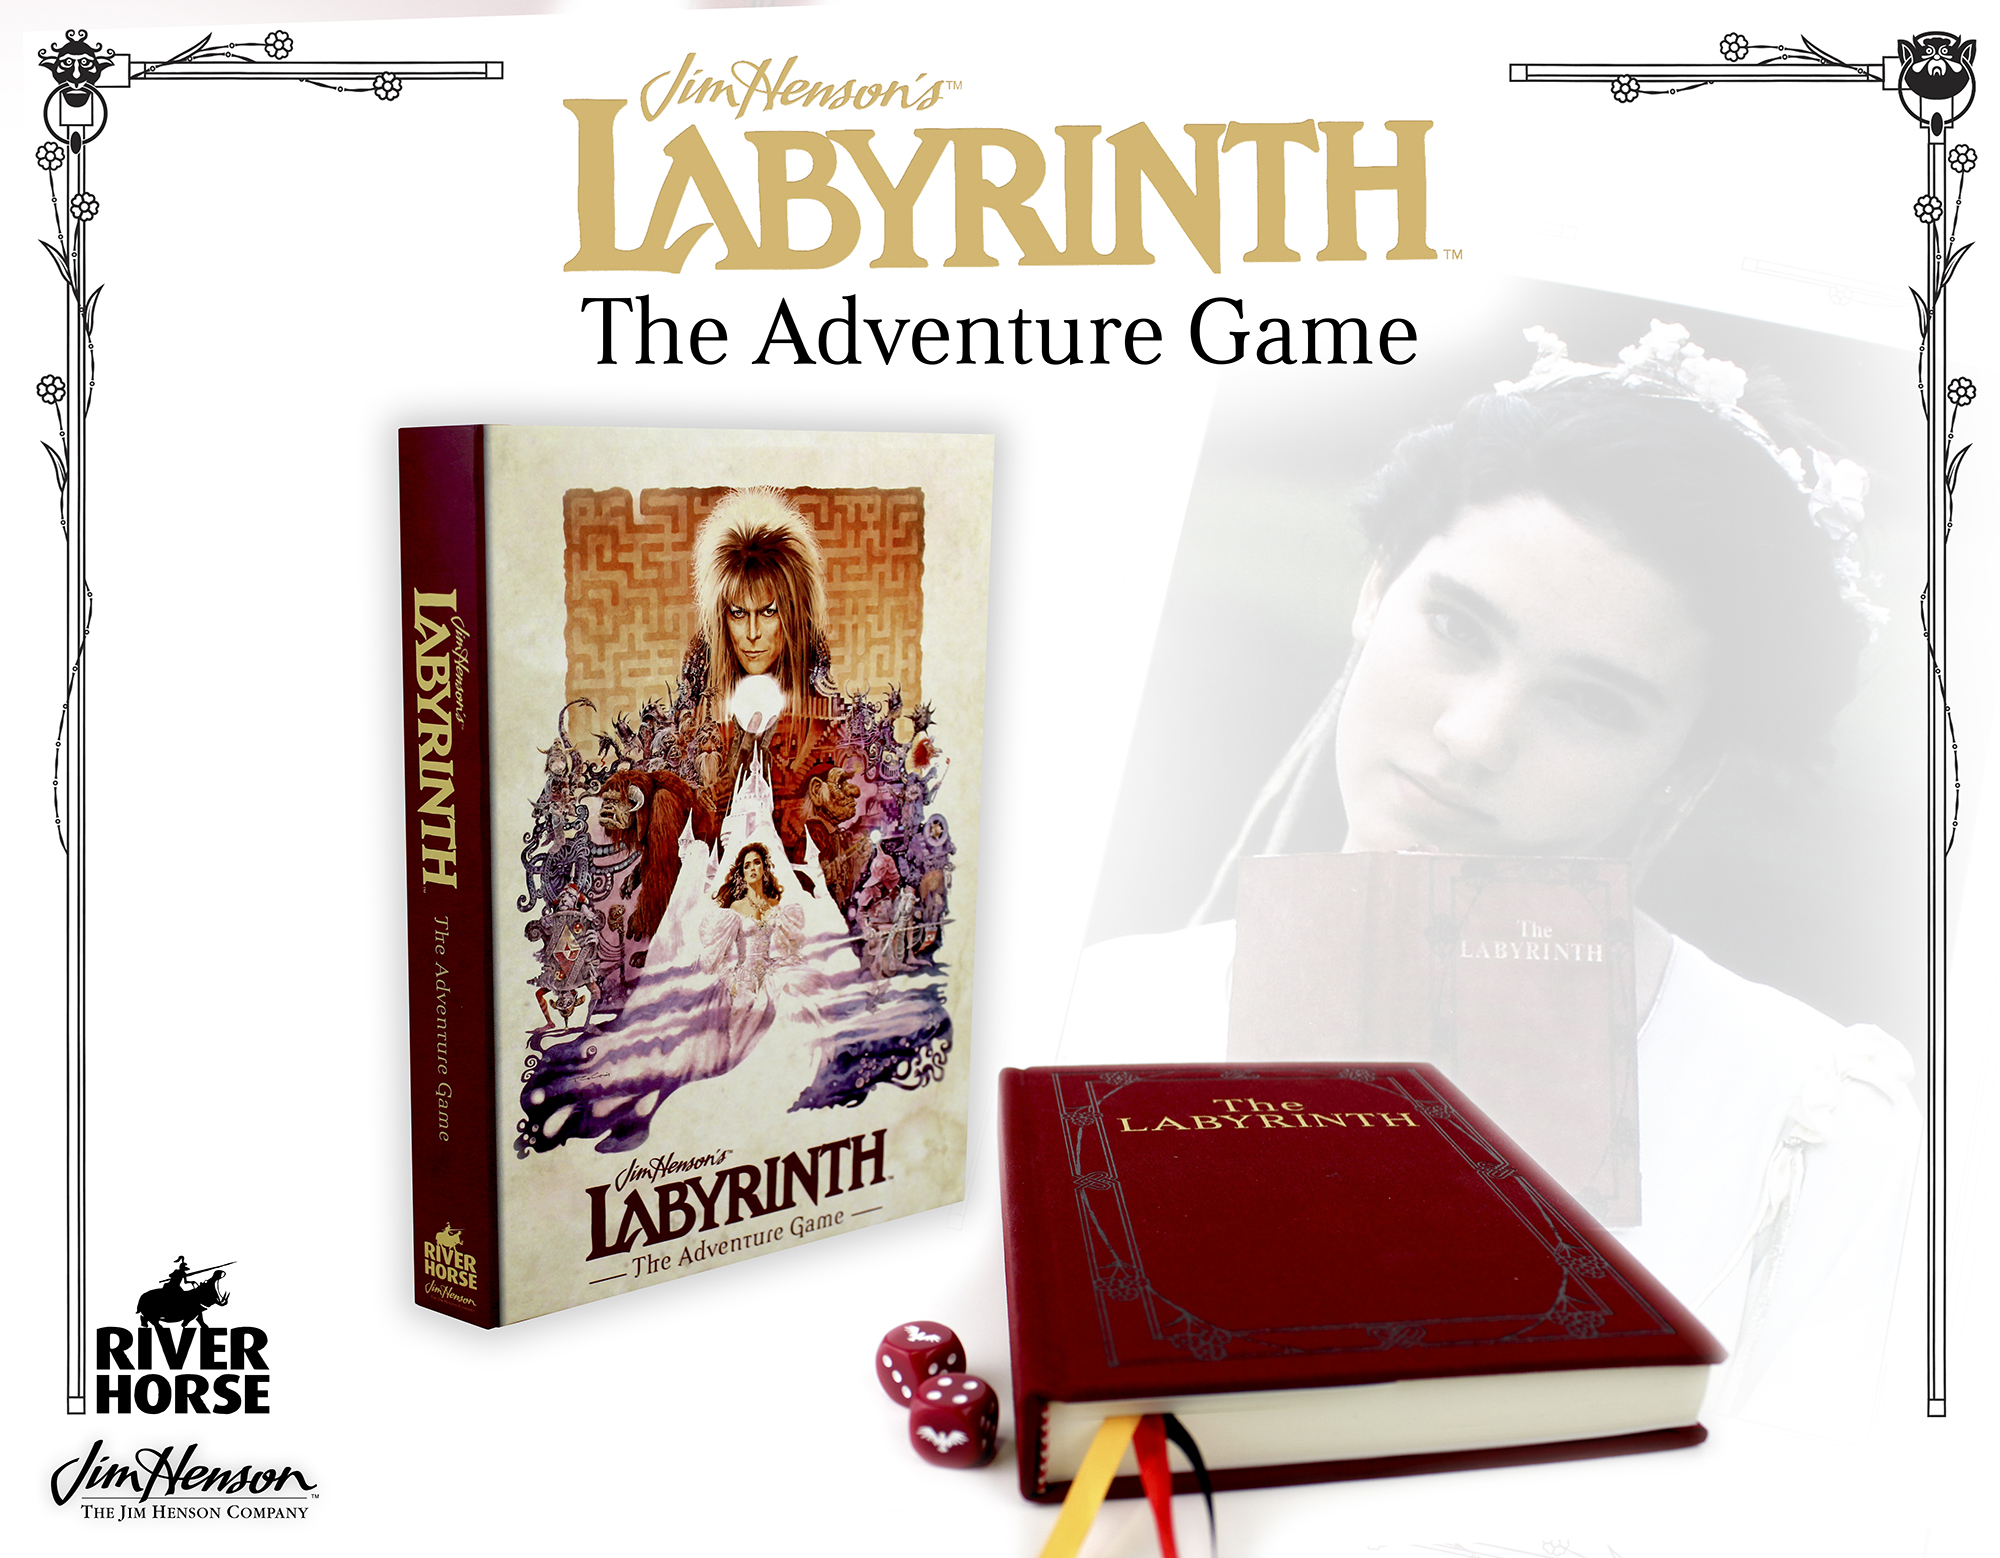 Jim Henson’s Labyrinth, the Adventure Game